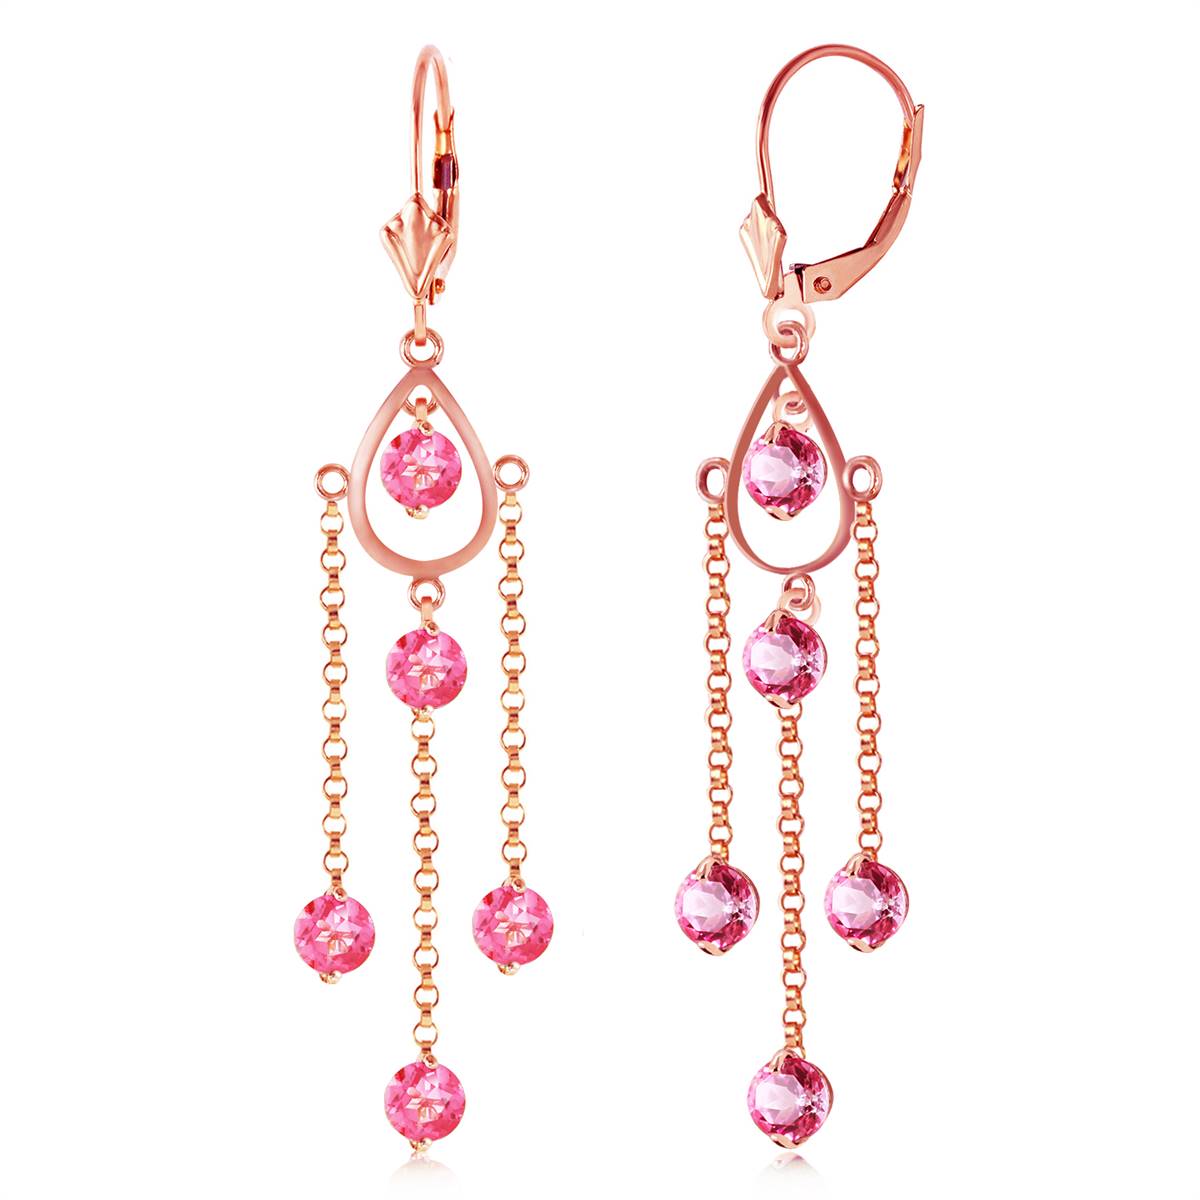 14K Solid Rose Gold Chandelier Earrings w/ Natural Pink Topaz